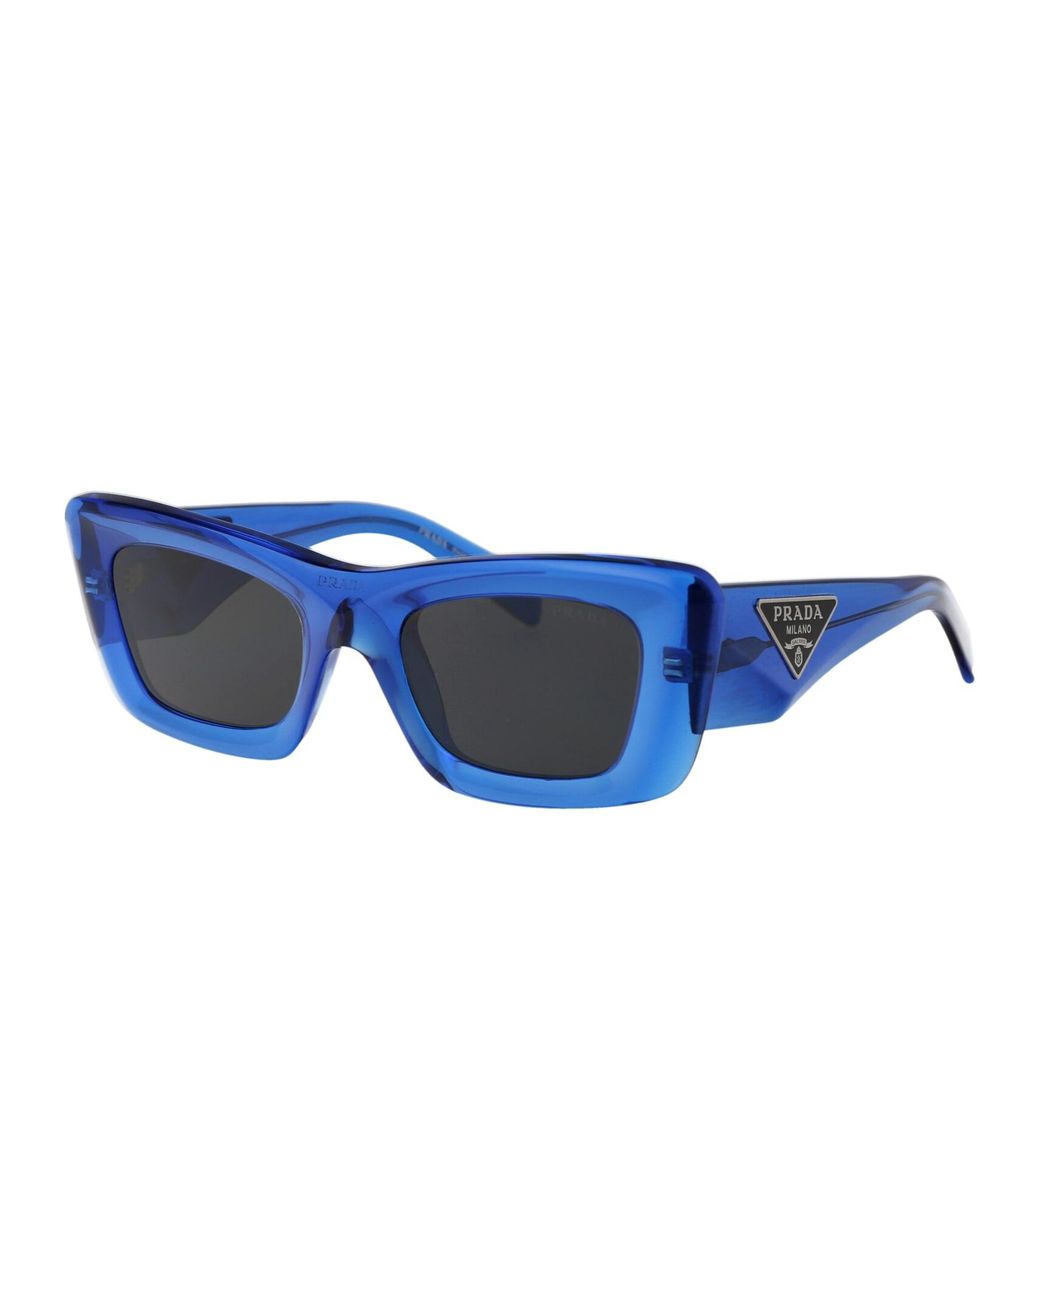 Prada Sunglasses in Blue | Lyst